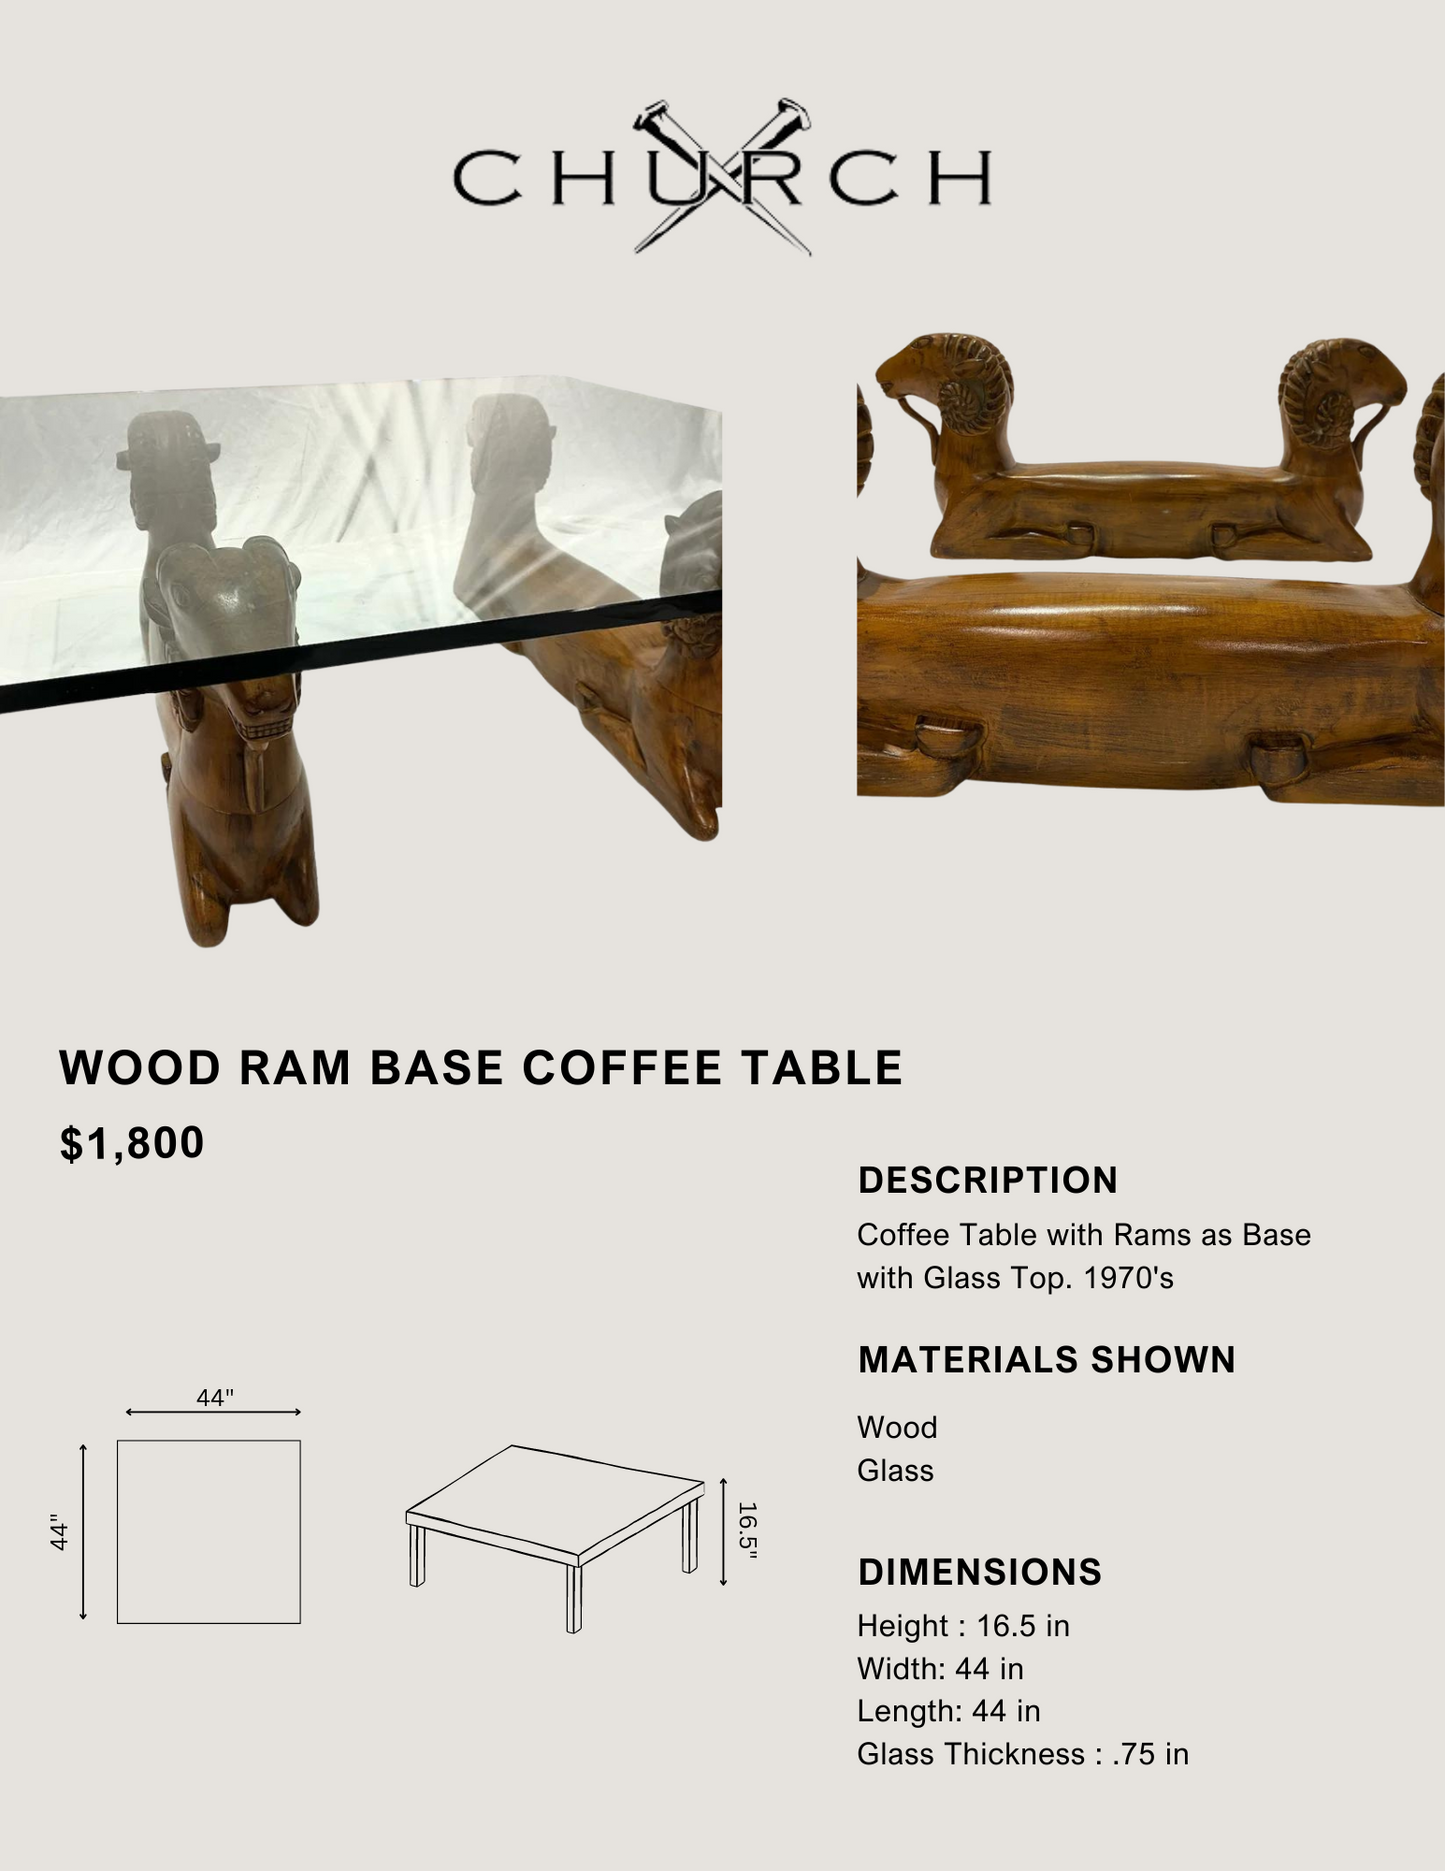 Wood Ram Base Coffee Table